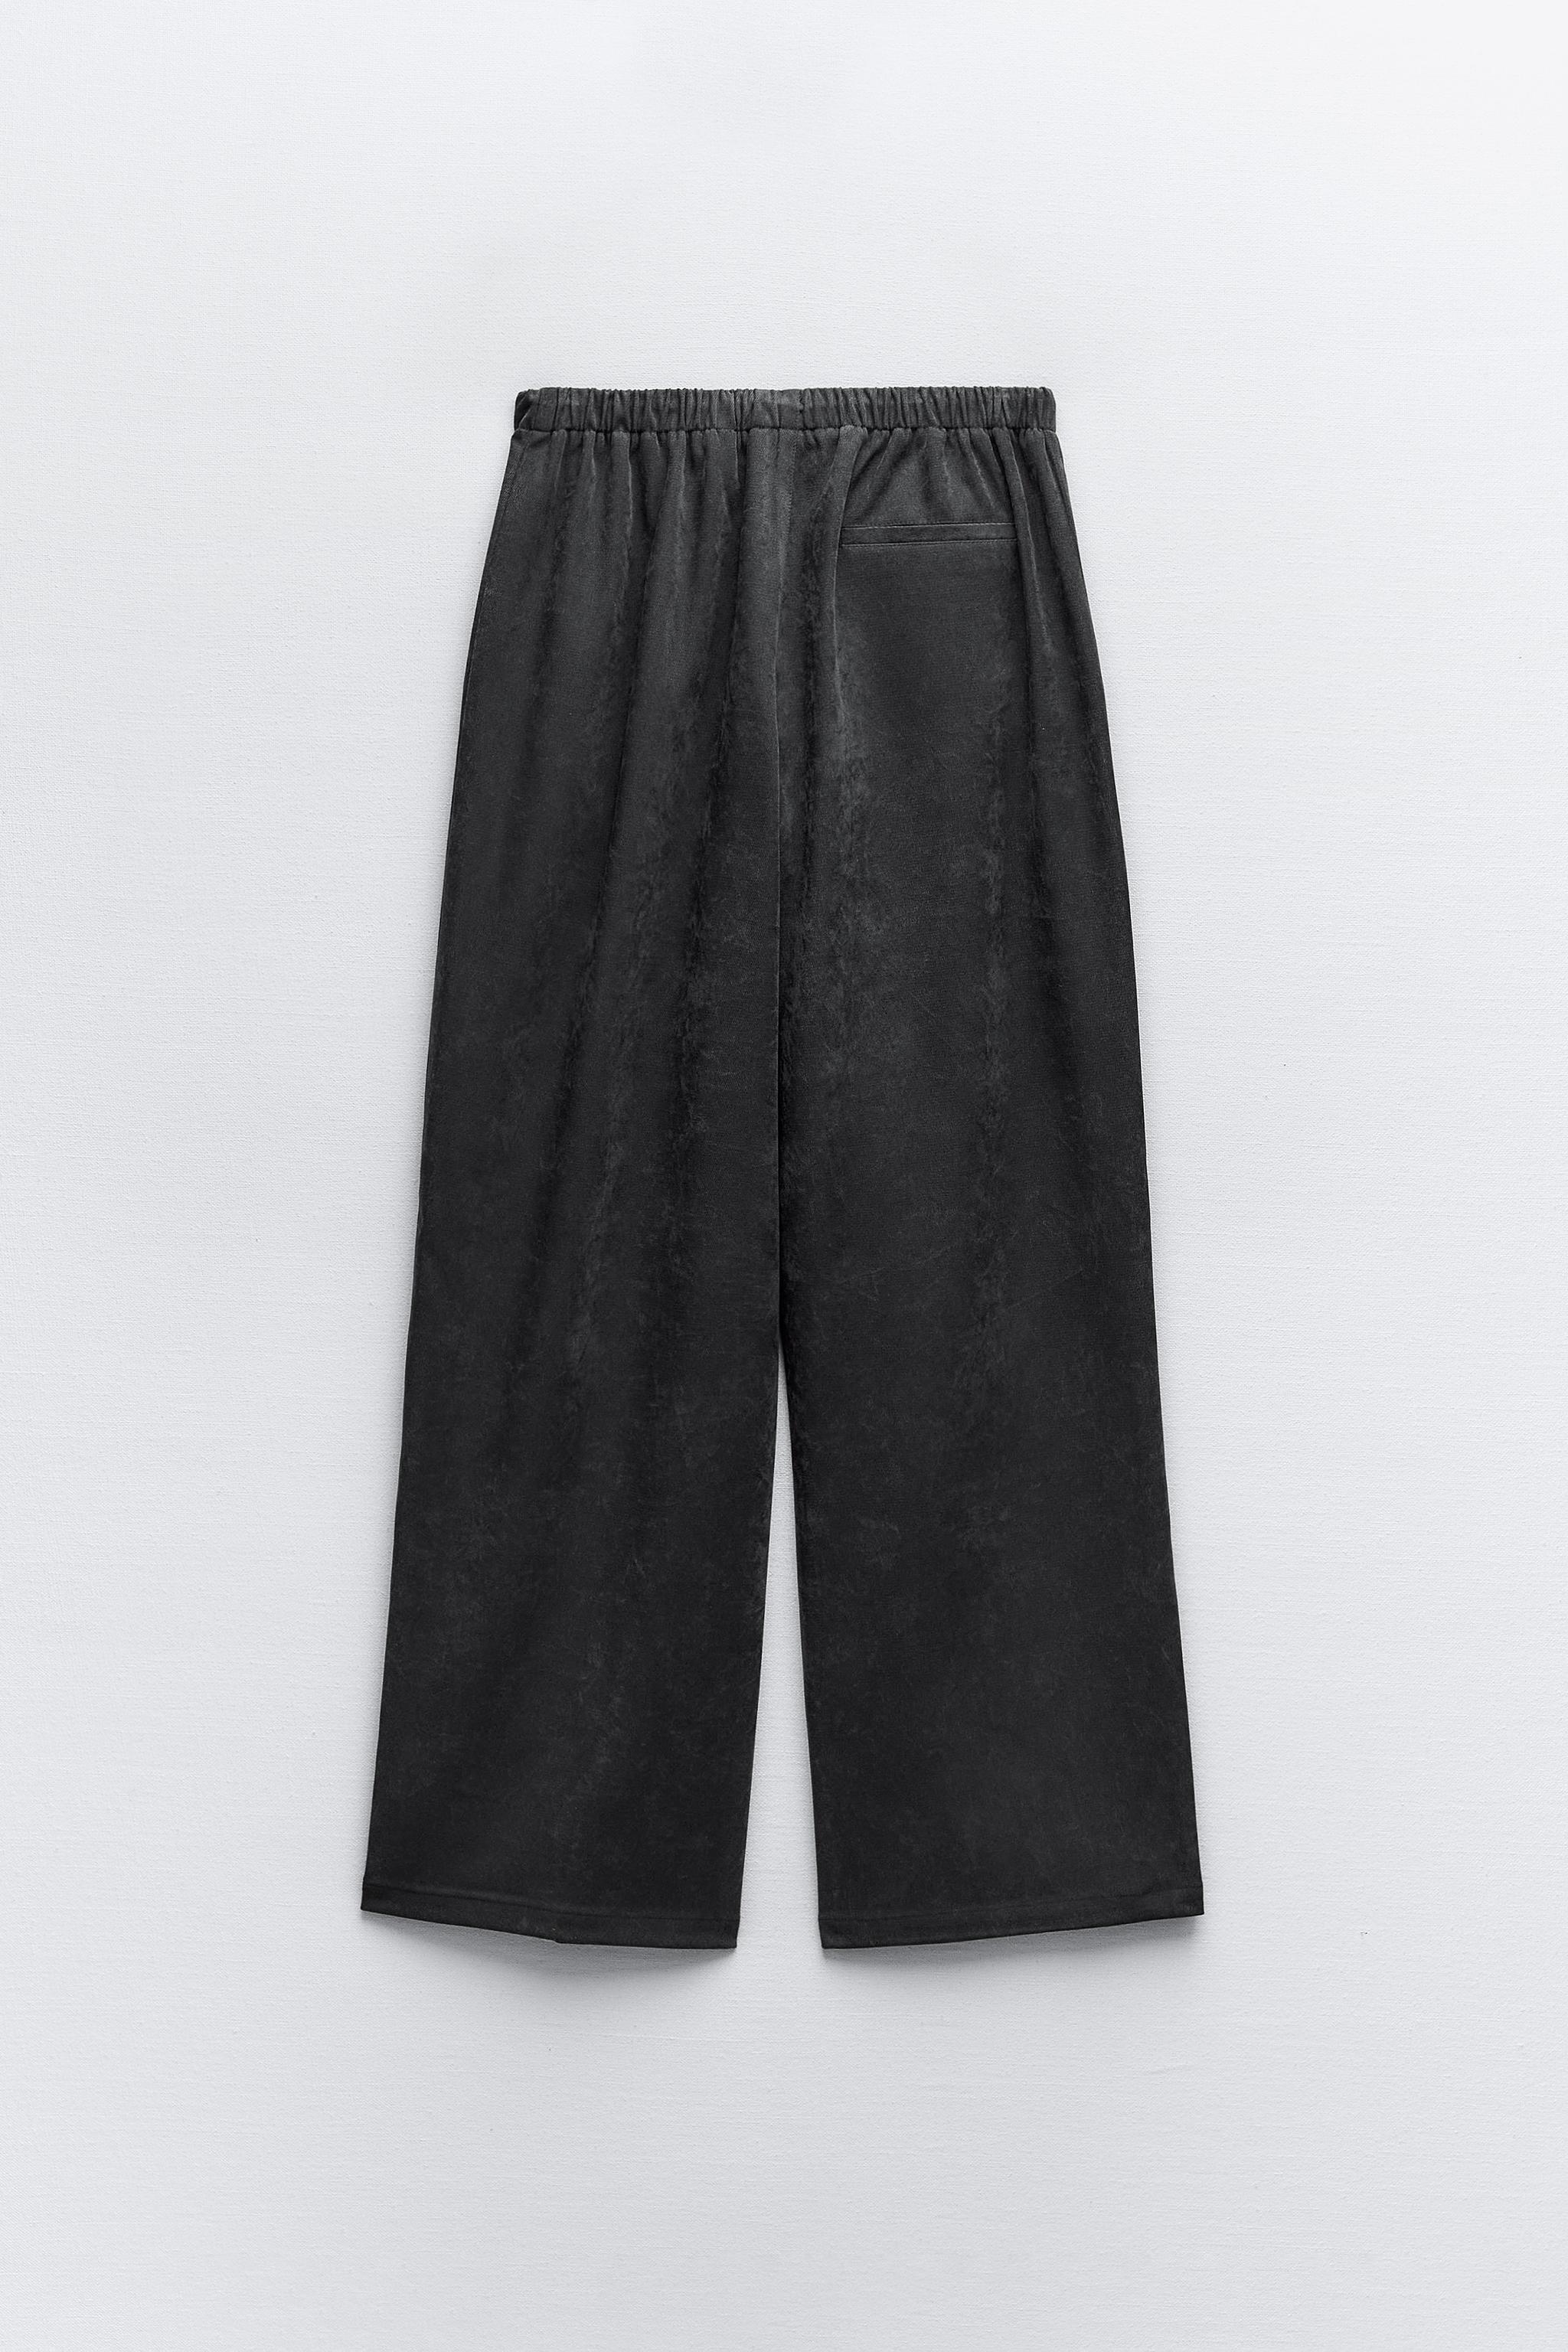 Zara Tapered Drawstring Trouser Sz. XS  Black wide leg trousers, Linen trouser  pants, Jumpsuit trousers